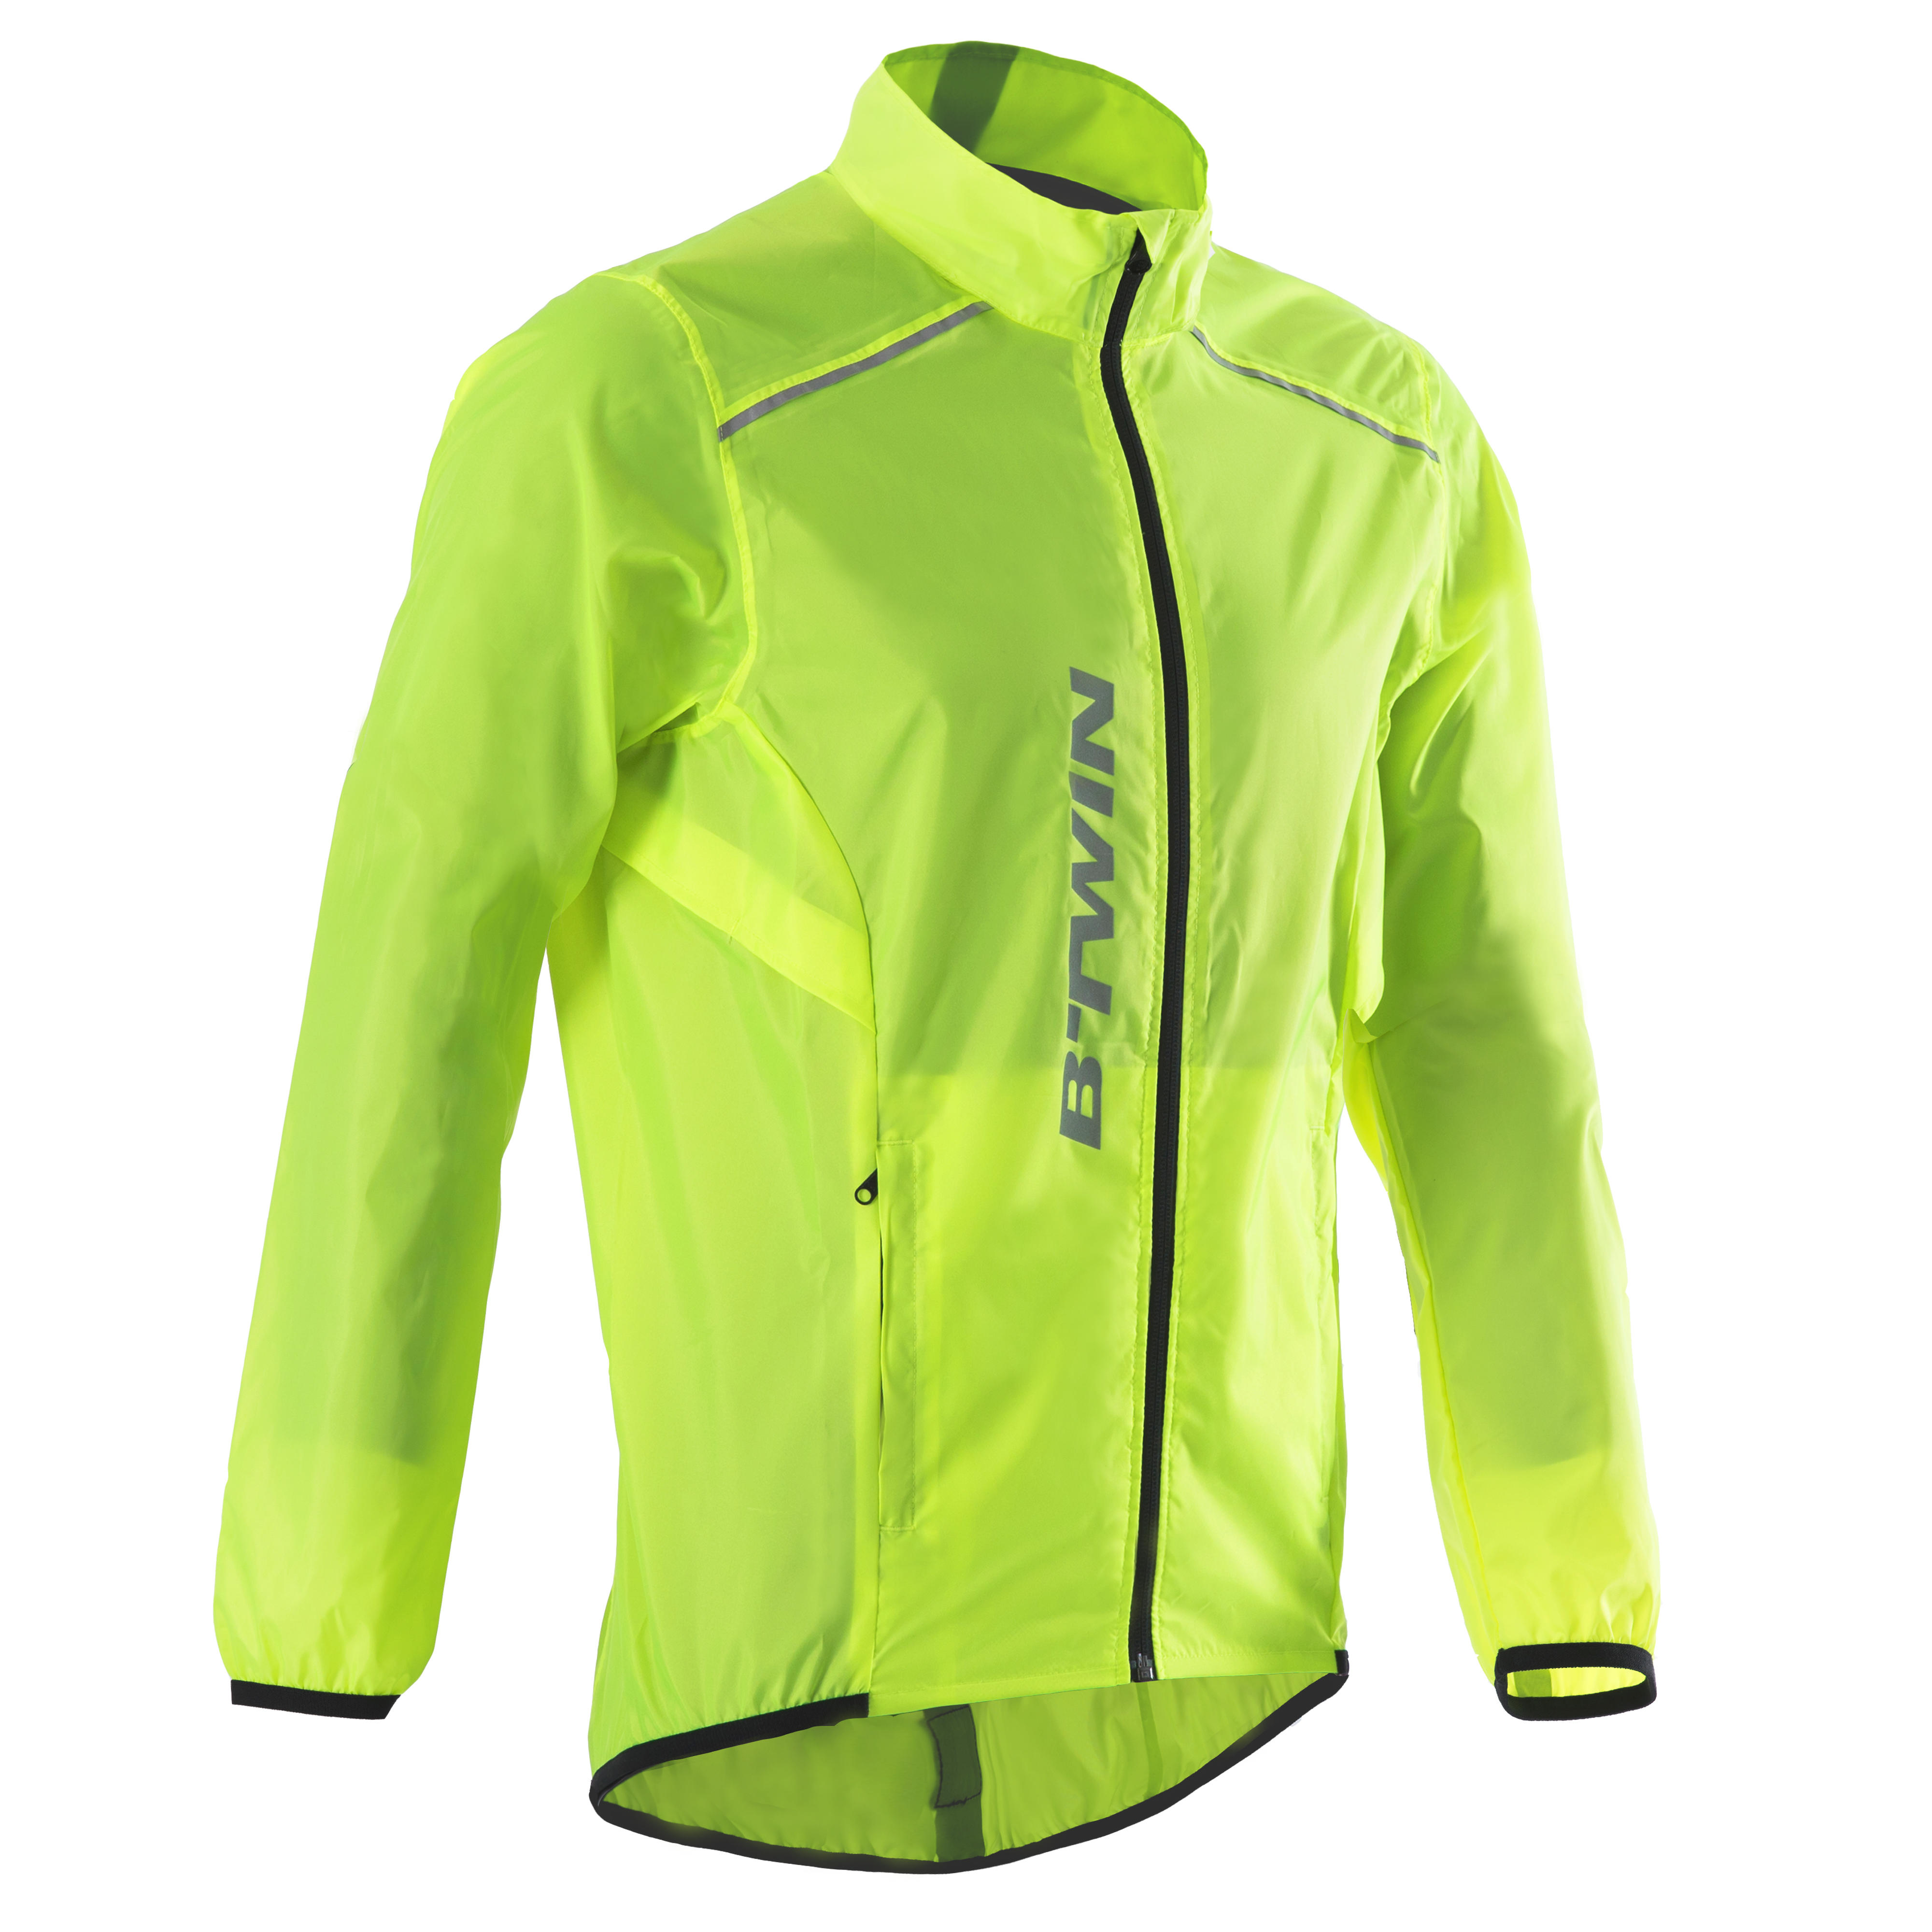 100 Road Cycling Rain Jacket - Neon Yellow